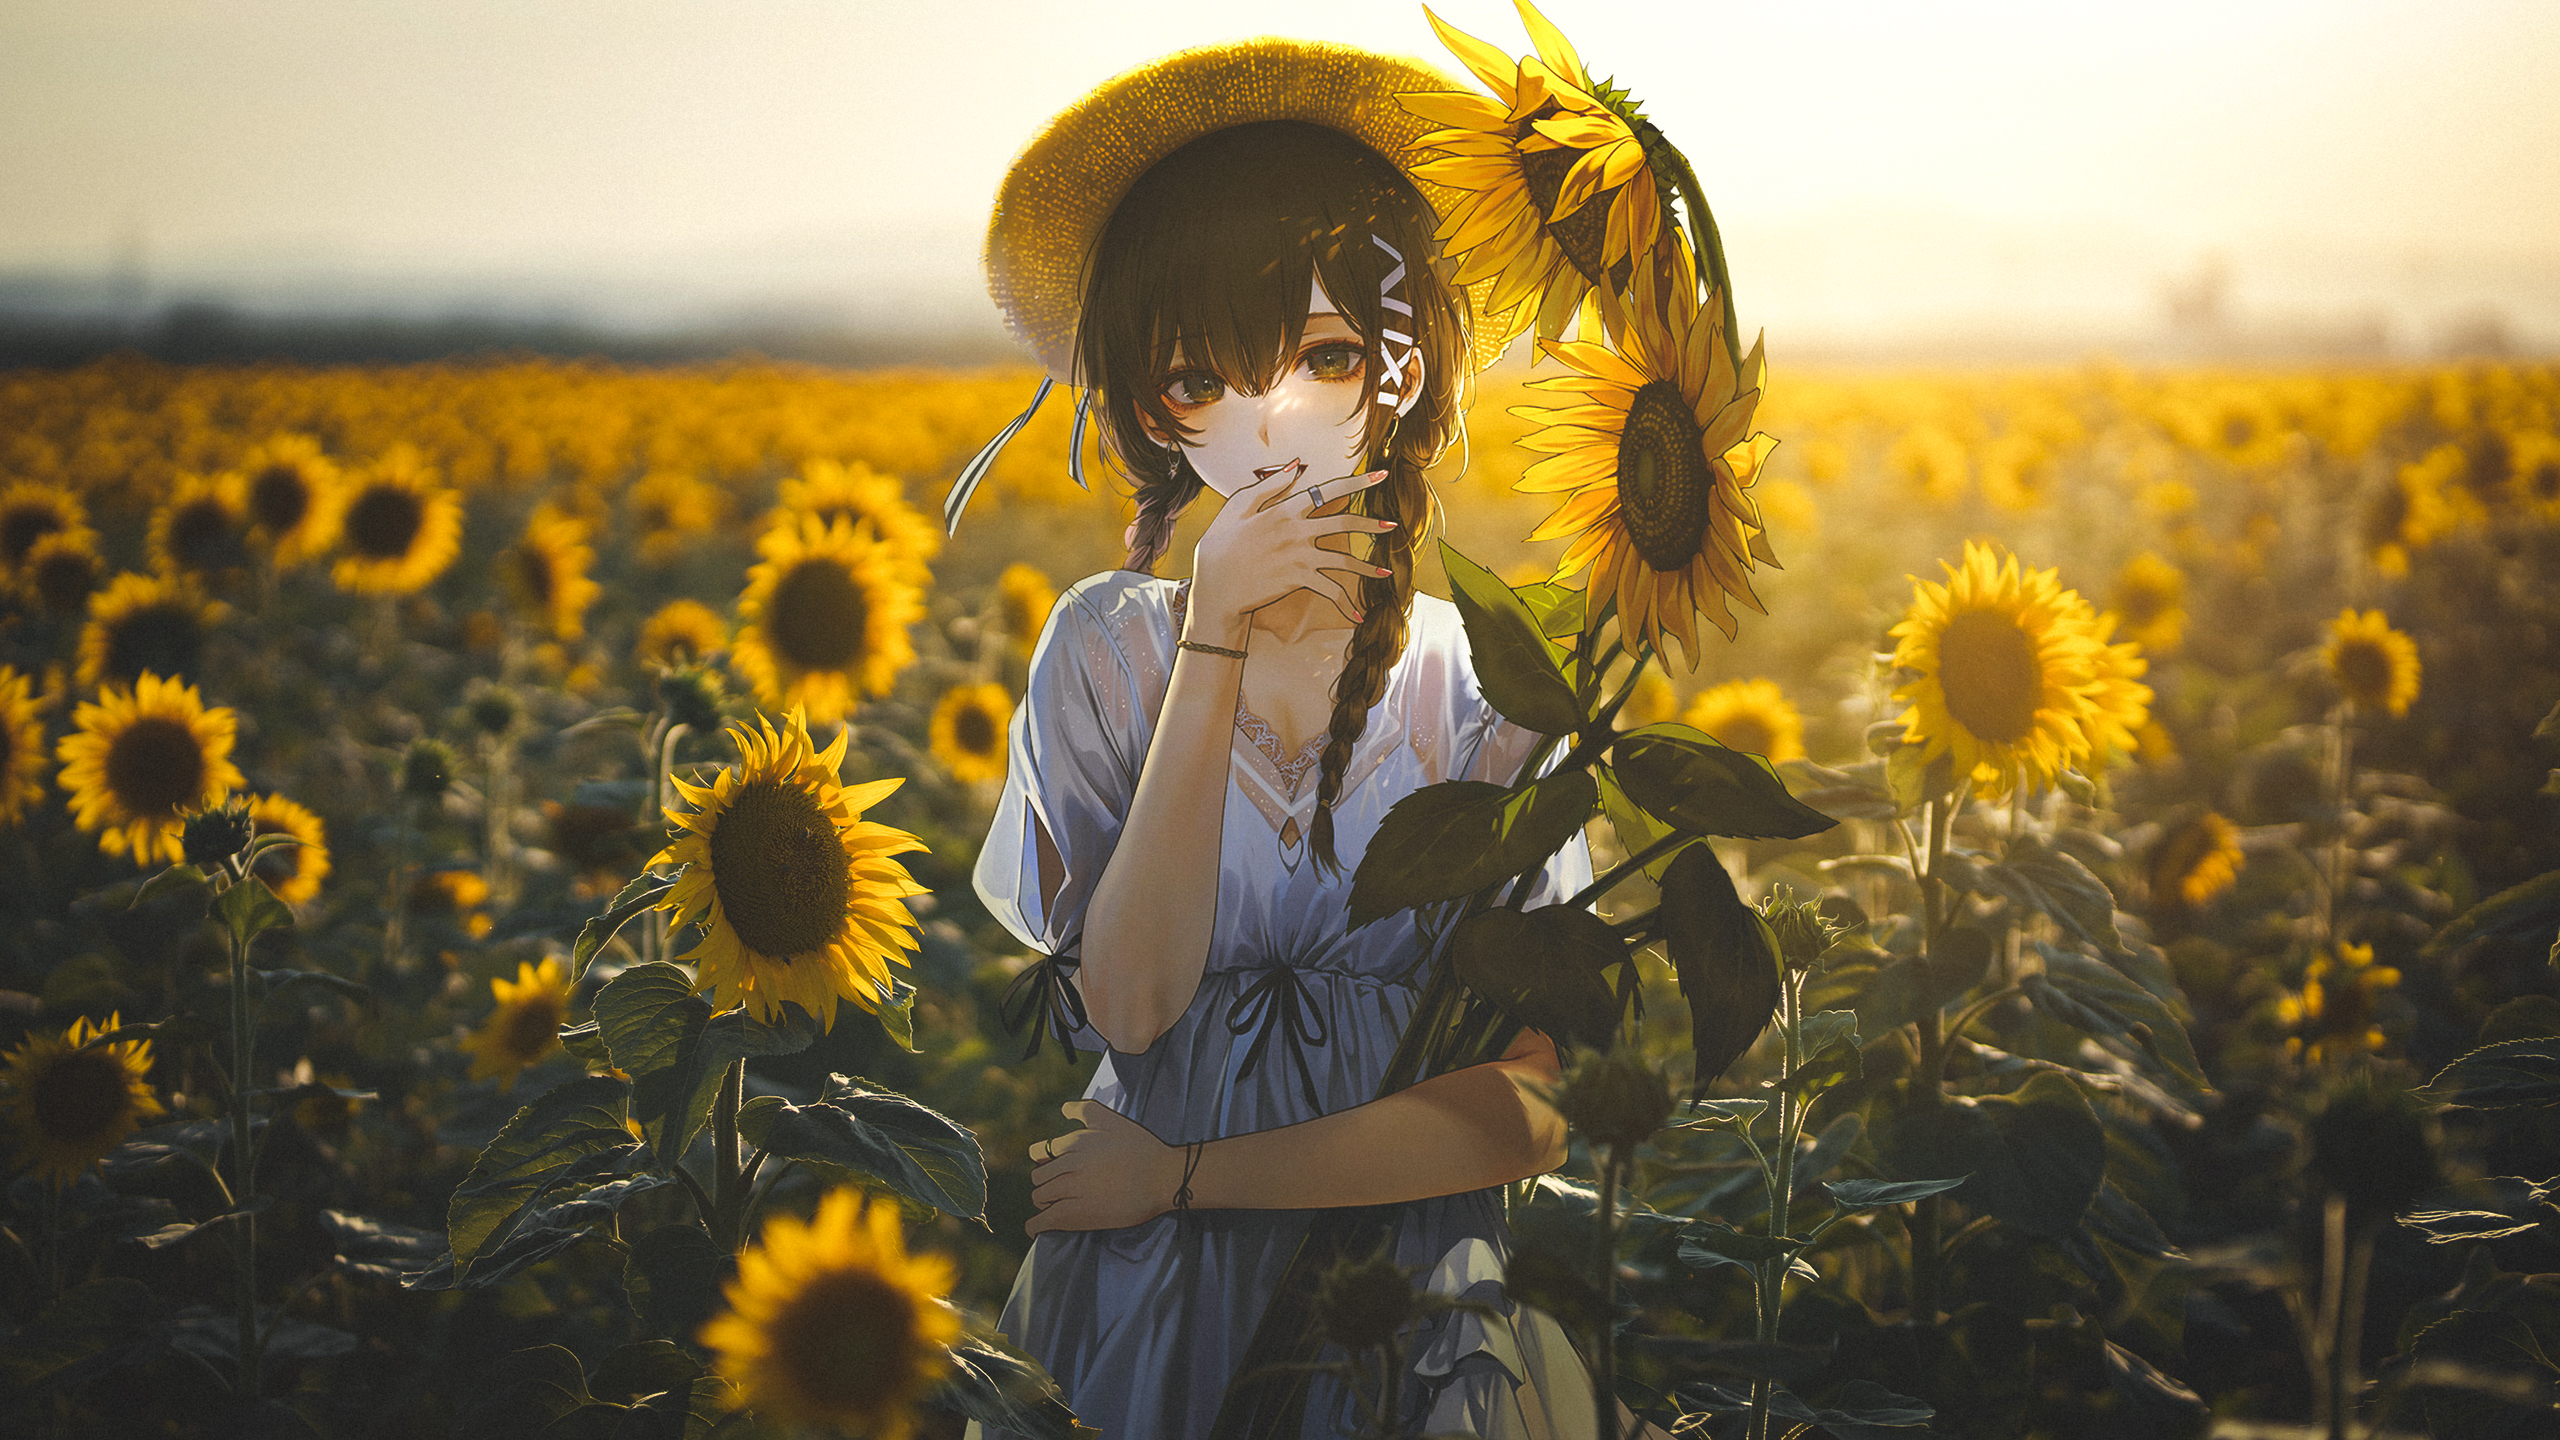 Anime Collage Sunflowers Field Anime Girls Braids Brunette Brown Eyes Straw Hat Dress 2560x1440